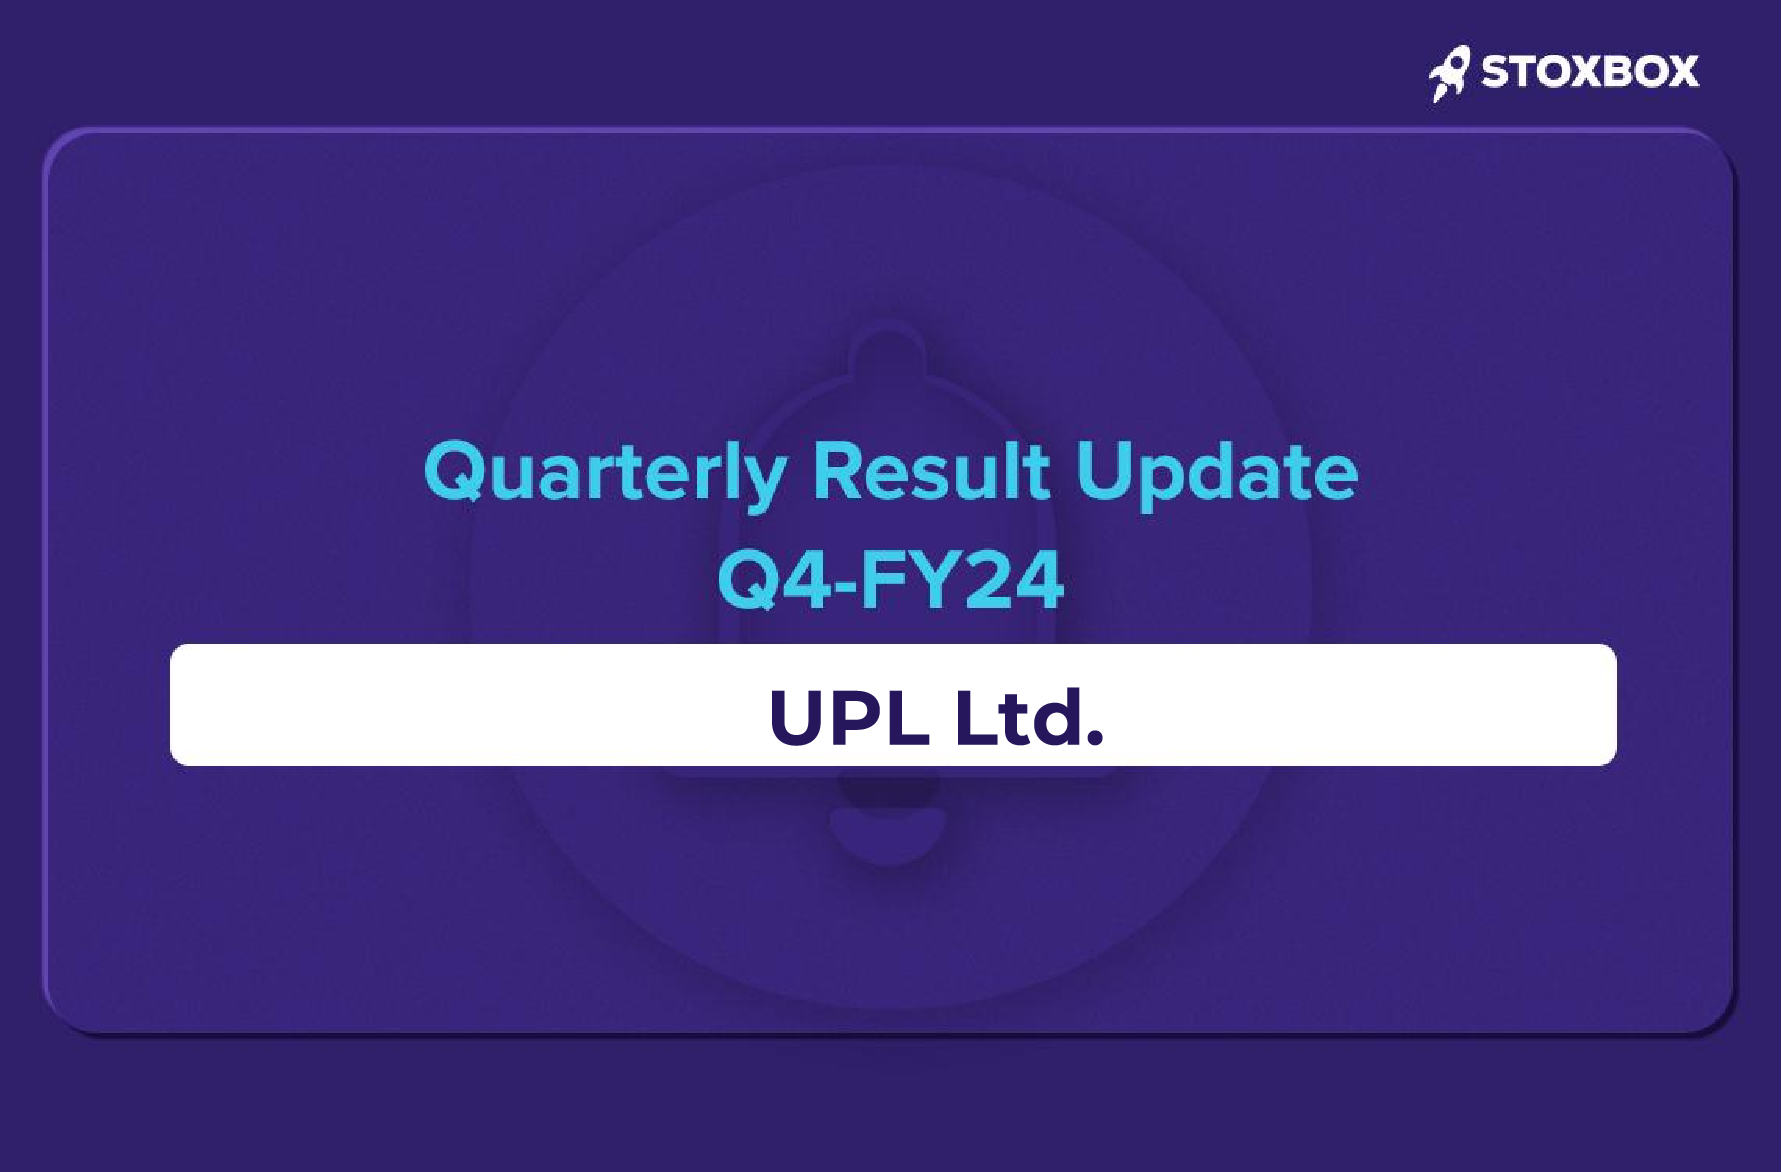 UPL Ltd quarterly results